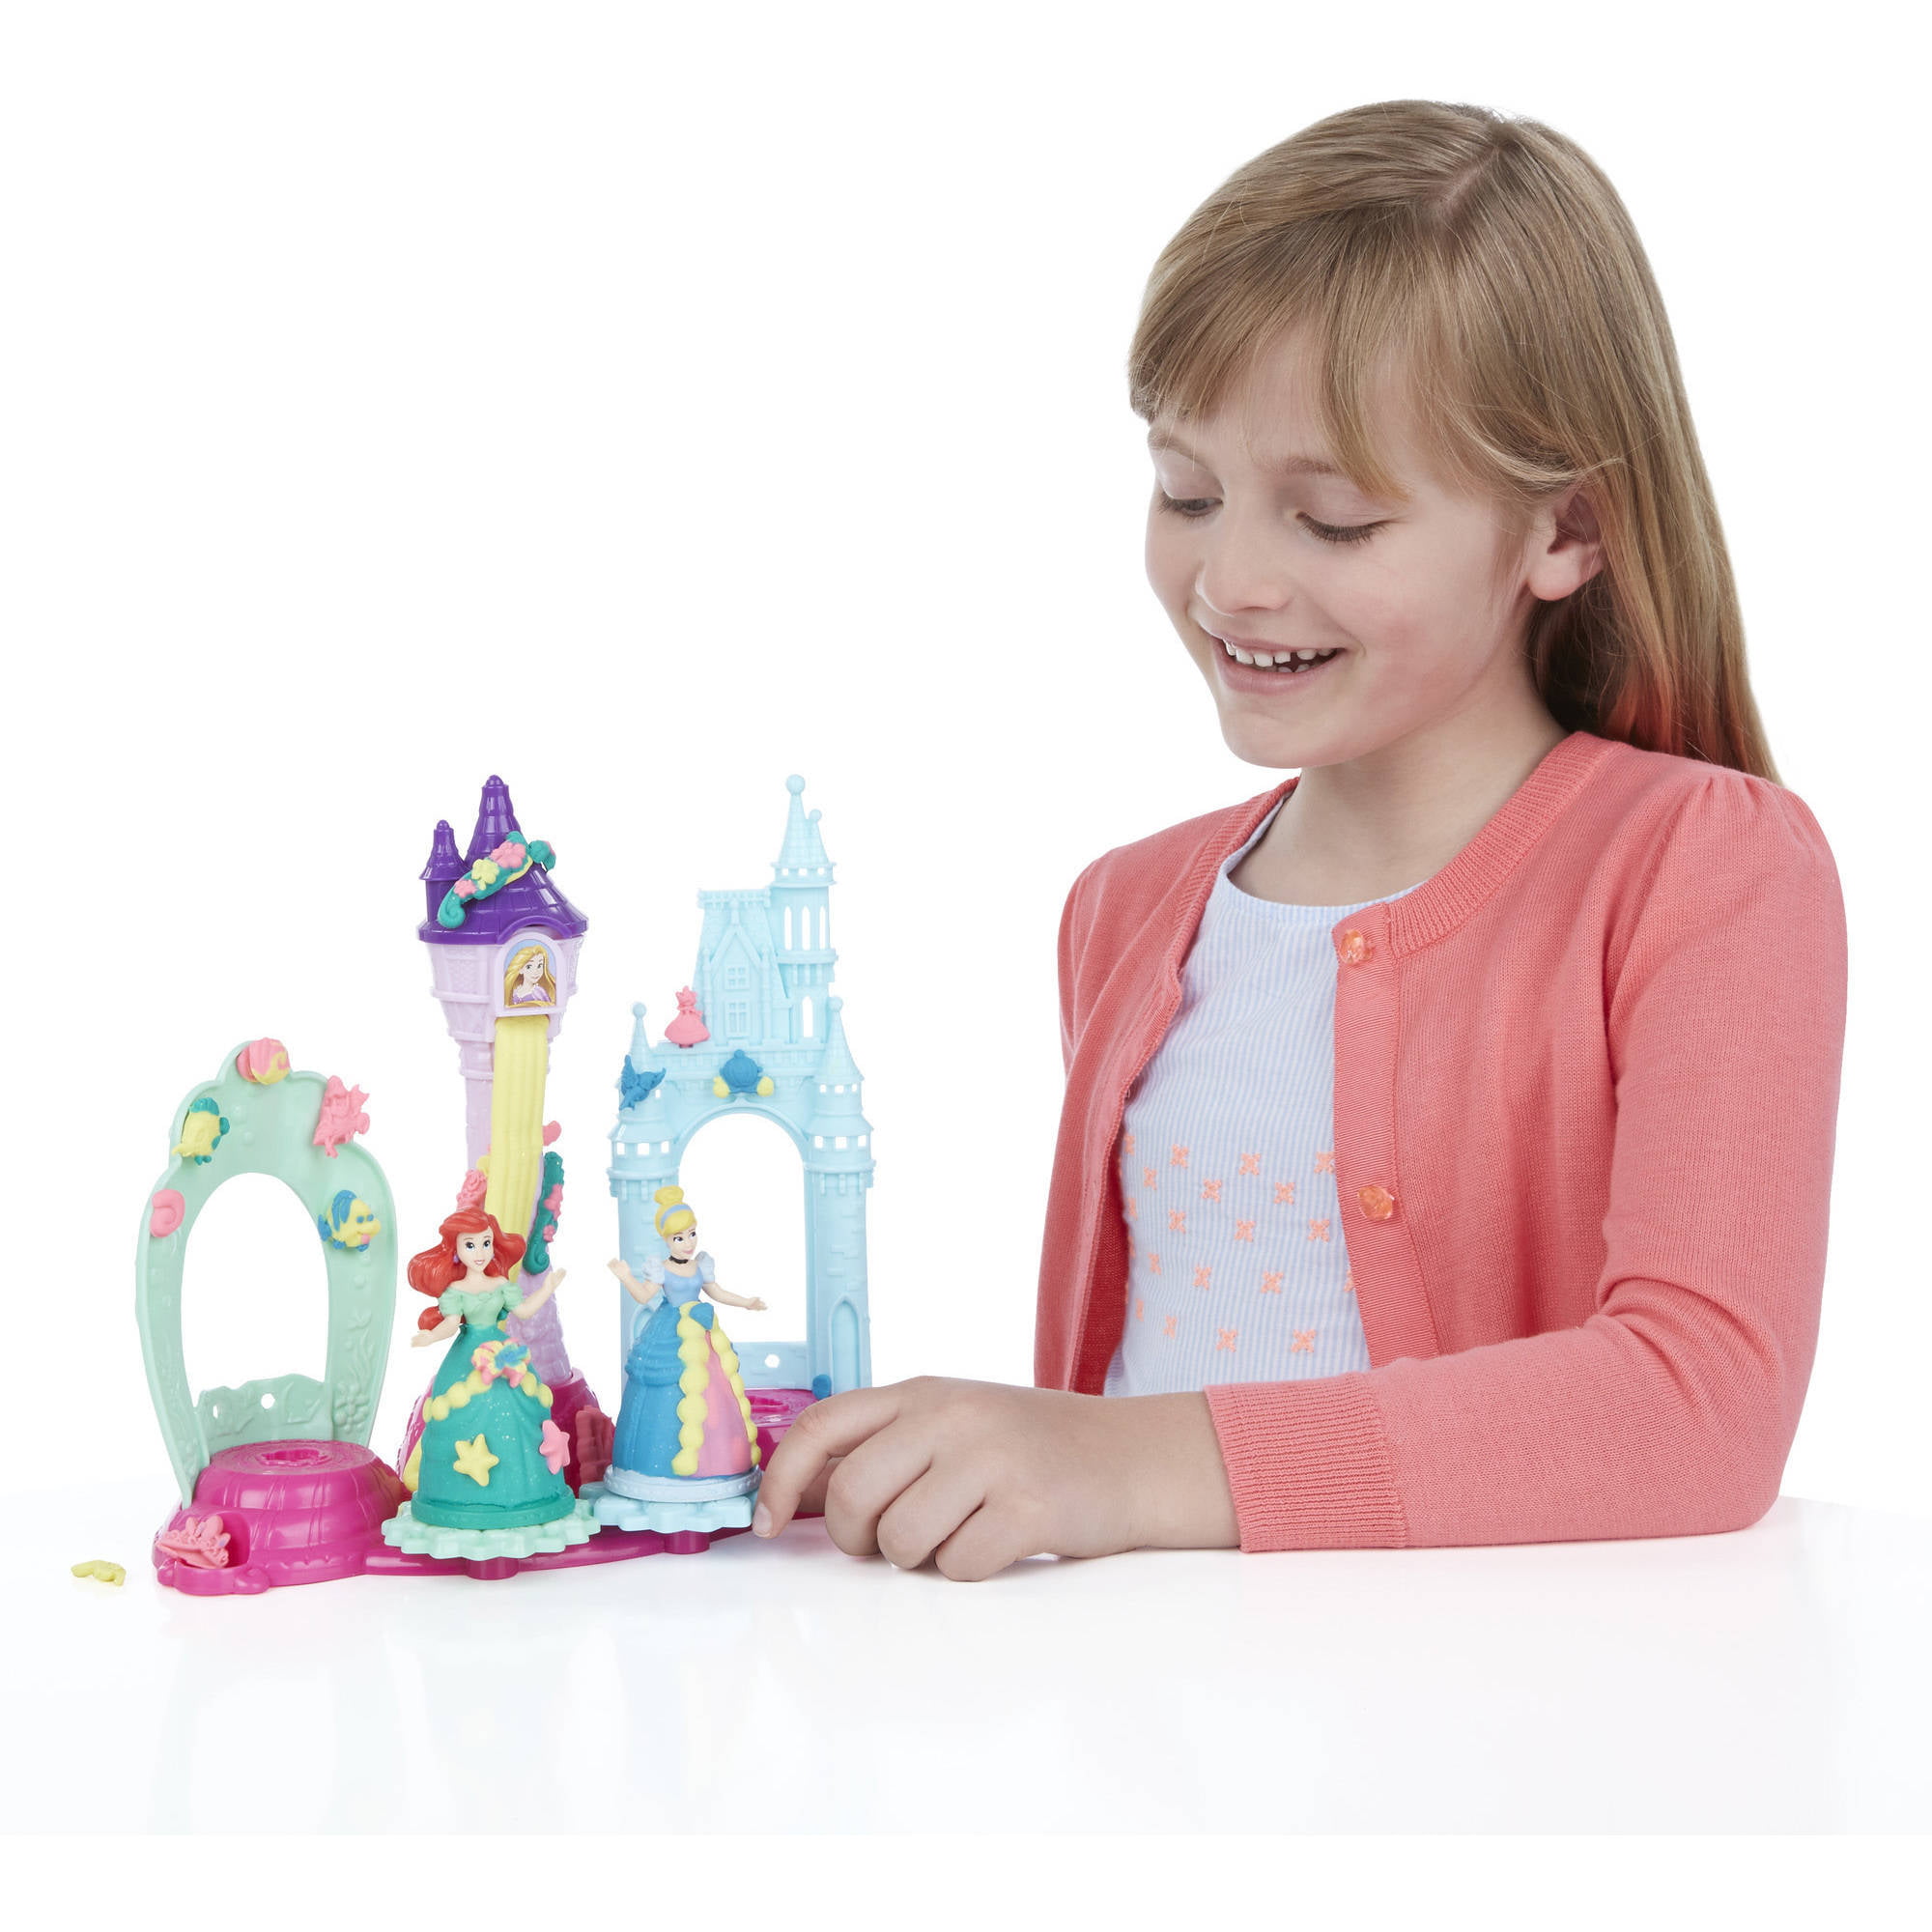 Play Doh Disney Princess Royal Palace Castle With Ariel & Cinderella Figures 